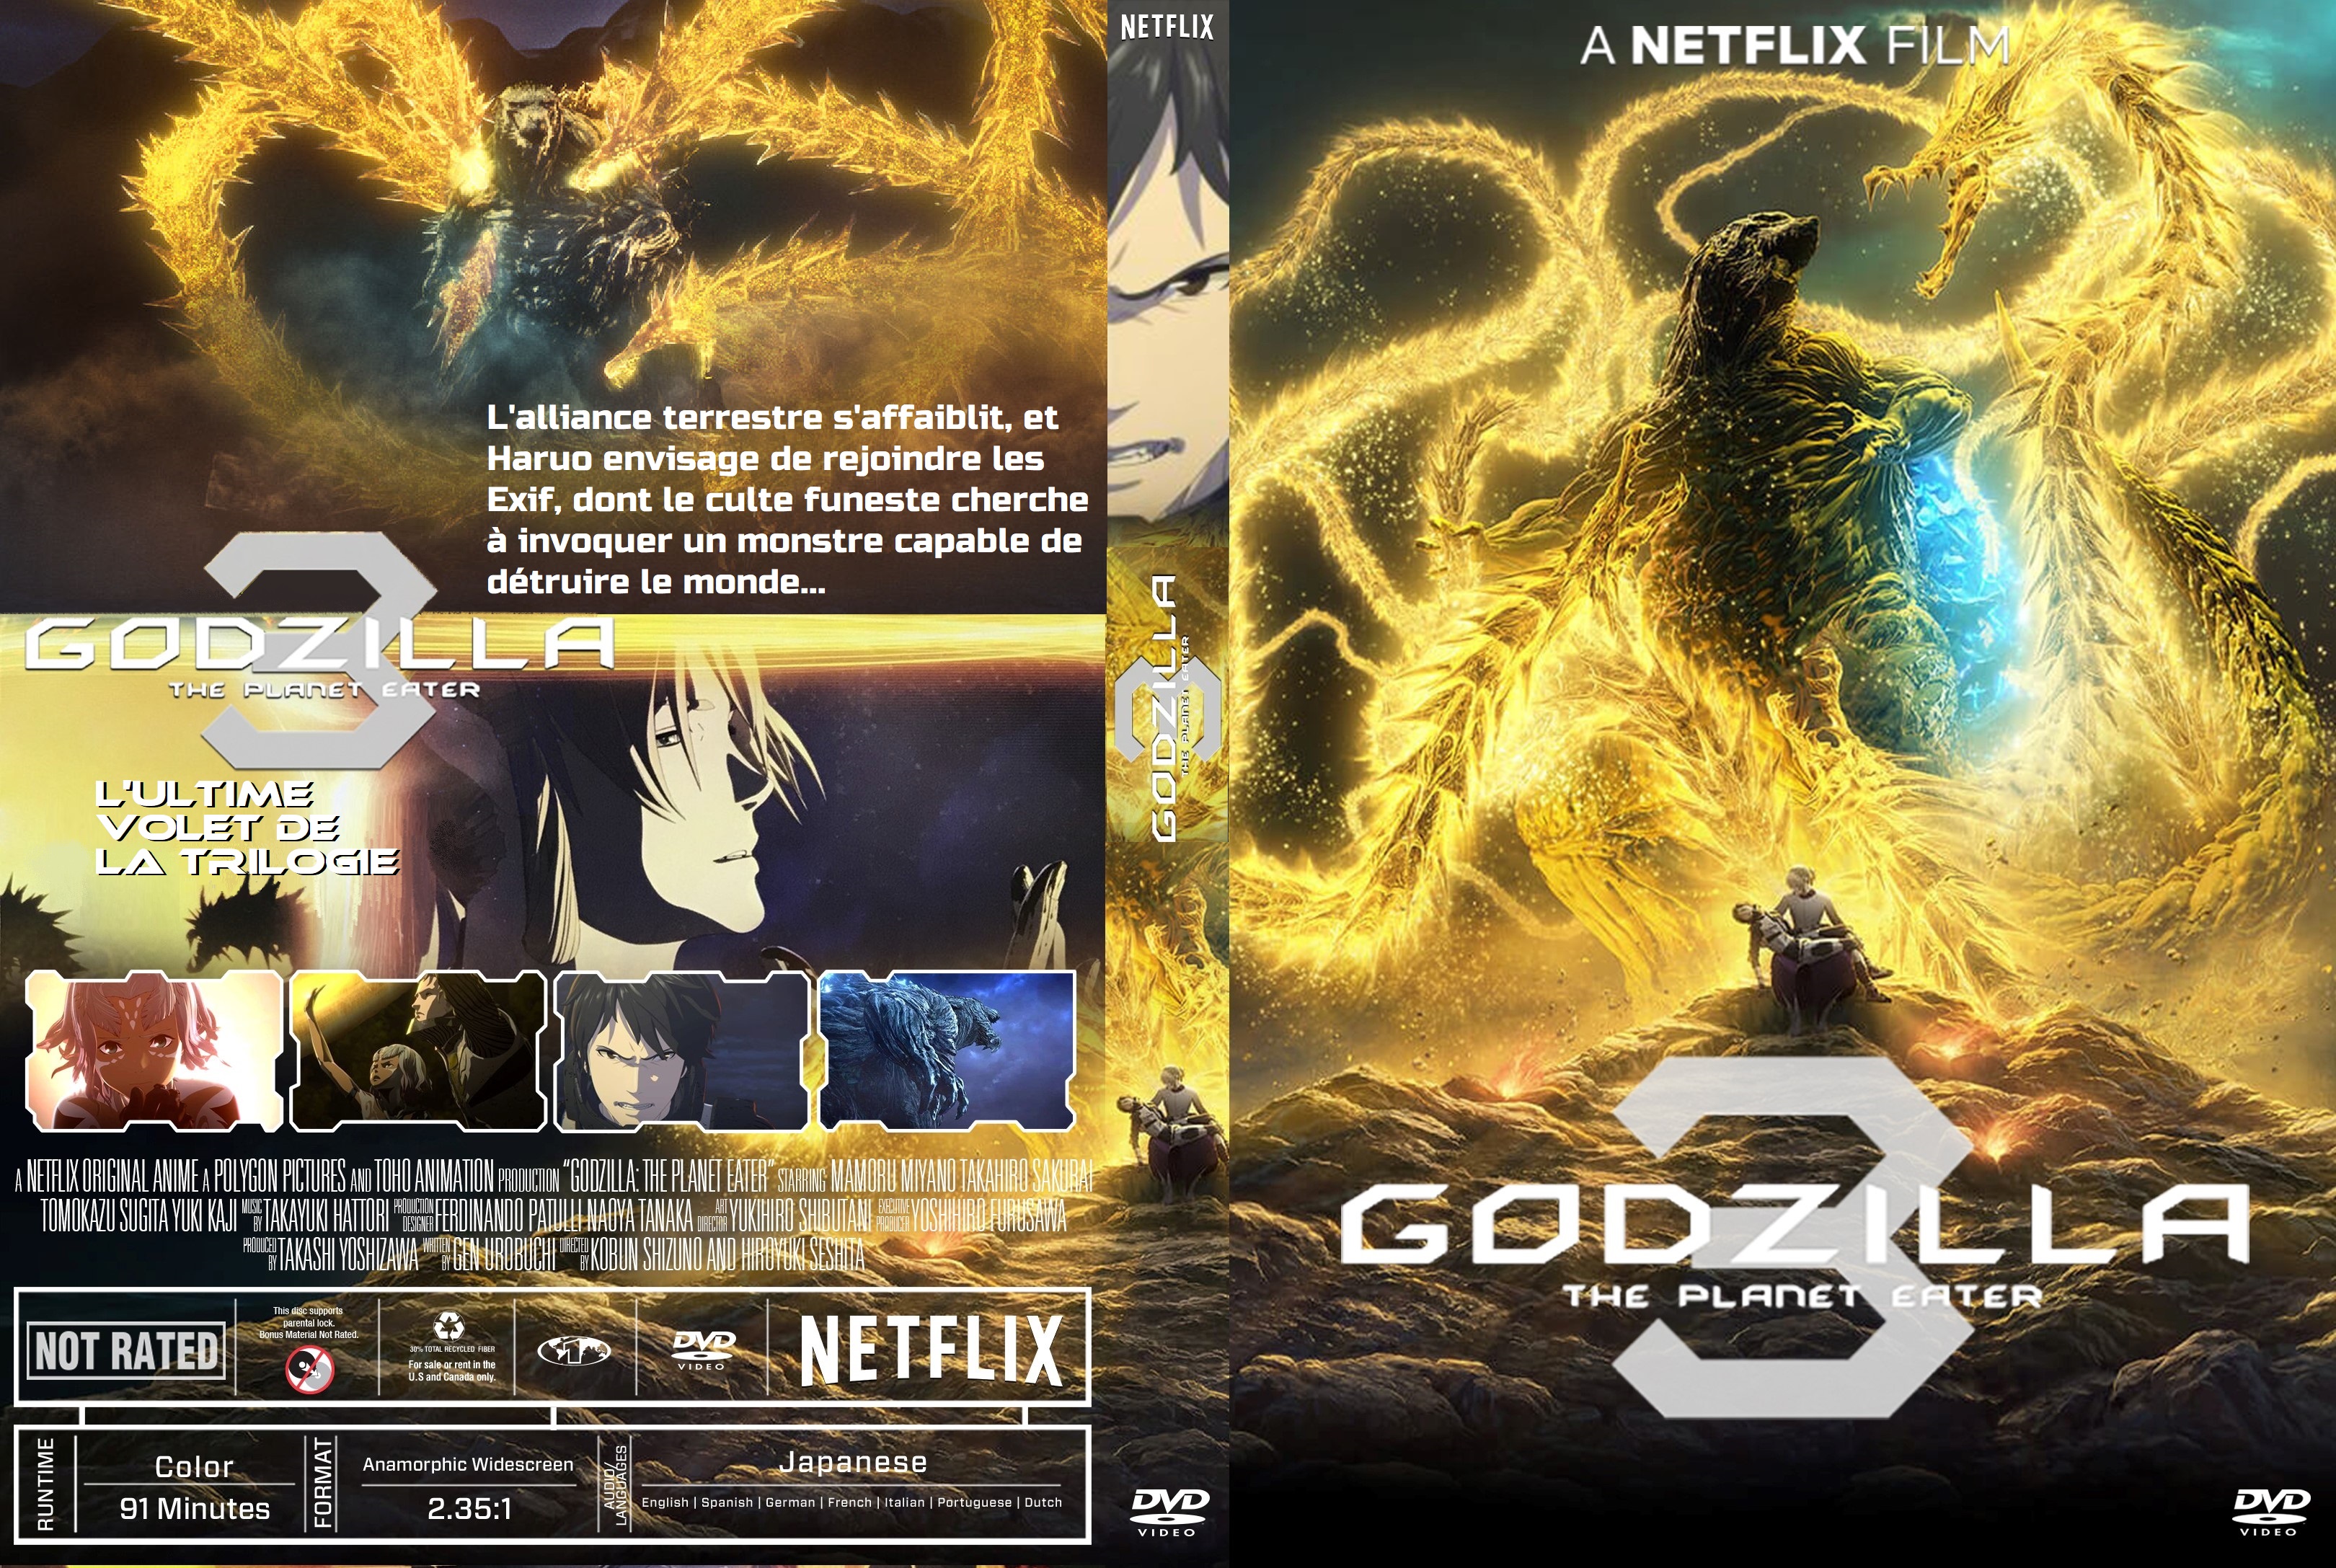 Jaquette DVD Godzilla 3 The Planet Eater custom